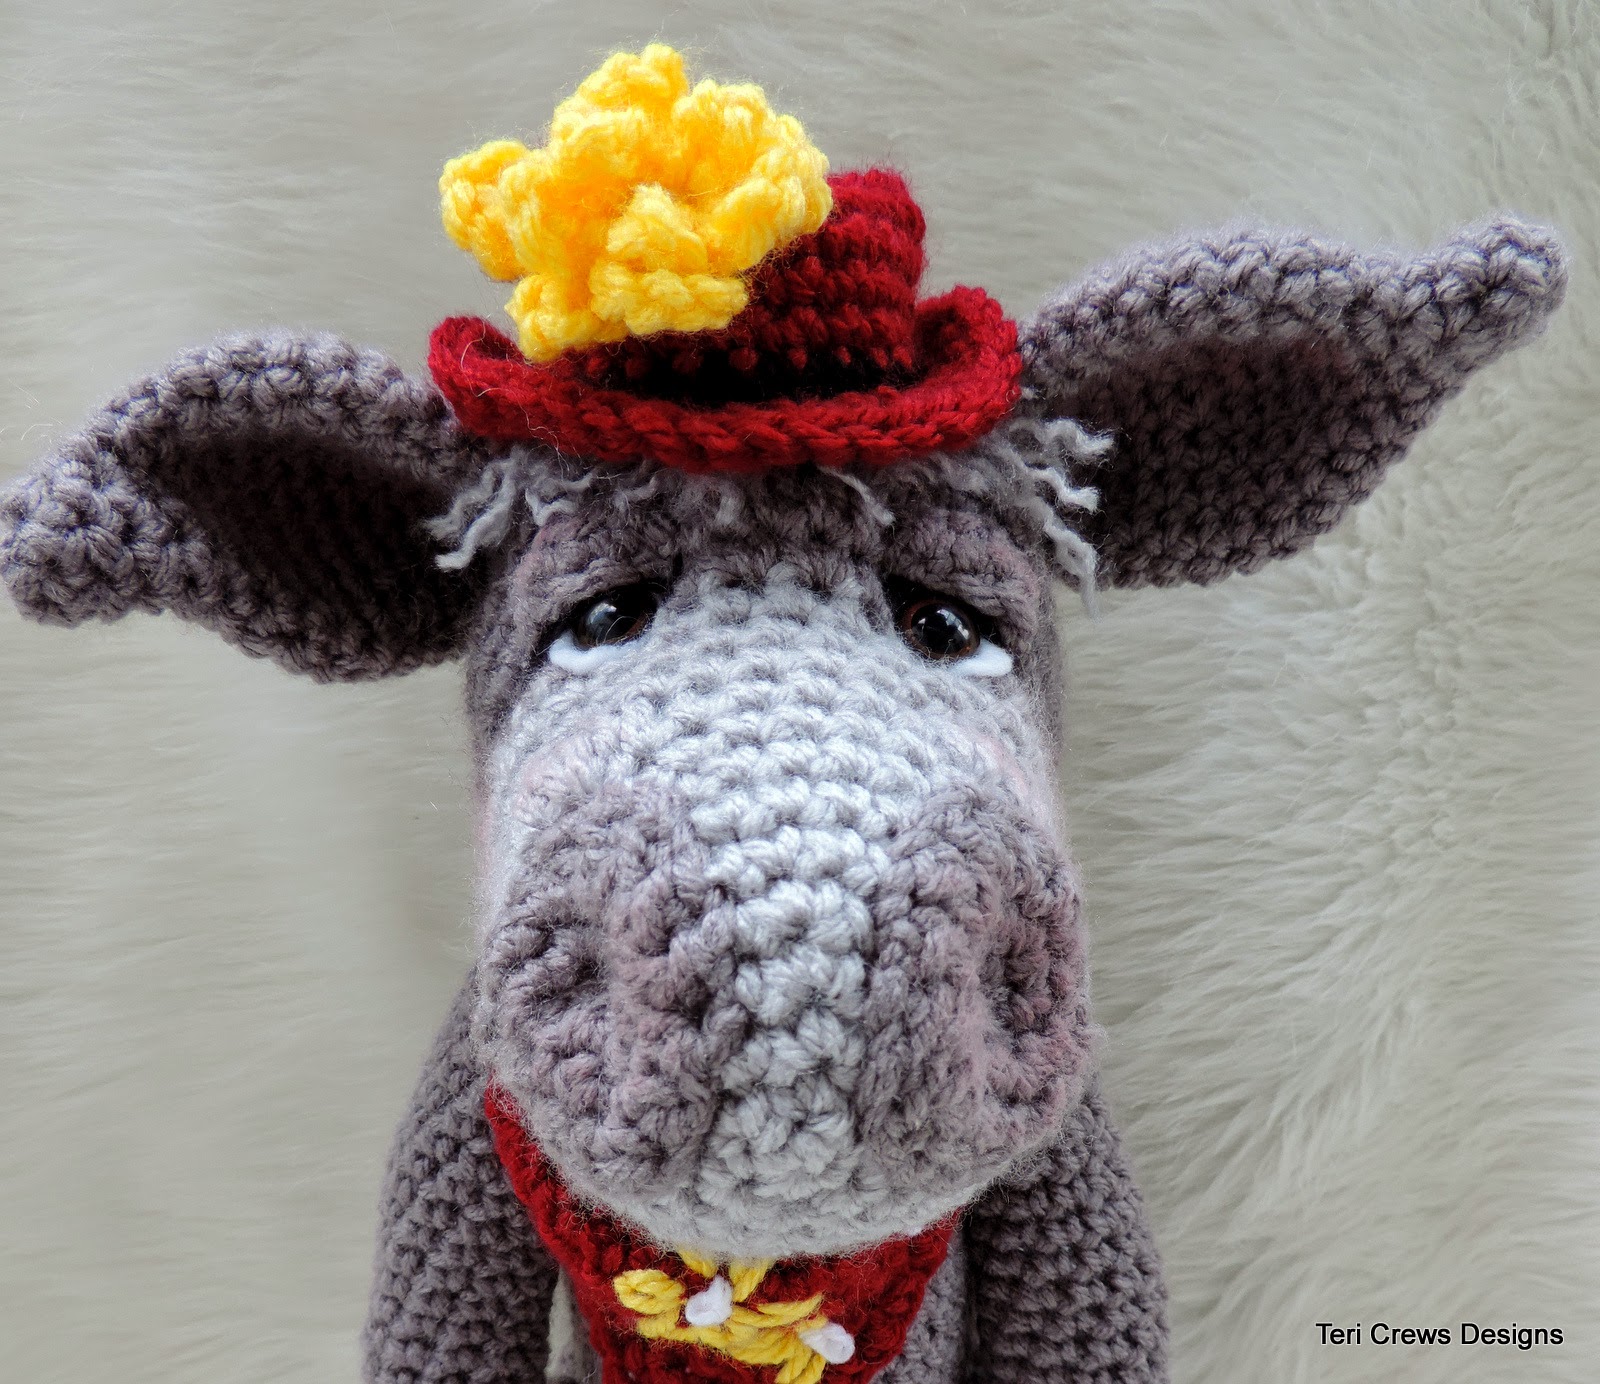 teri-s-blog-new-donkey-crochet-pattern